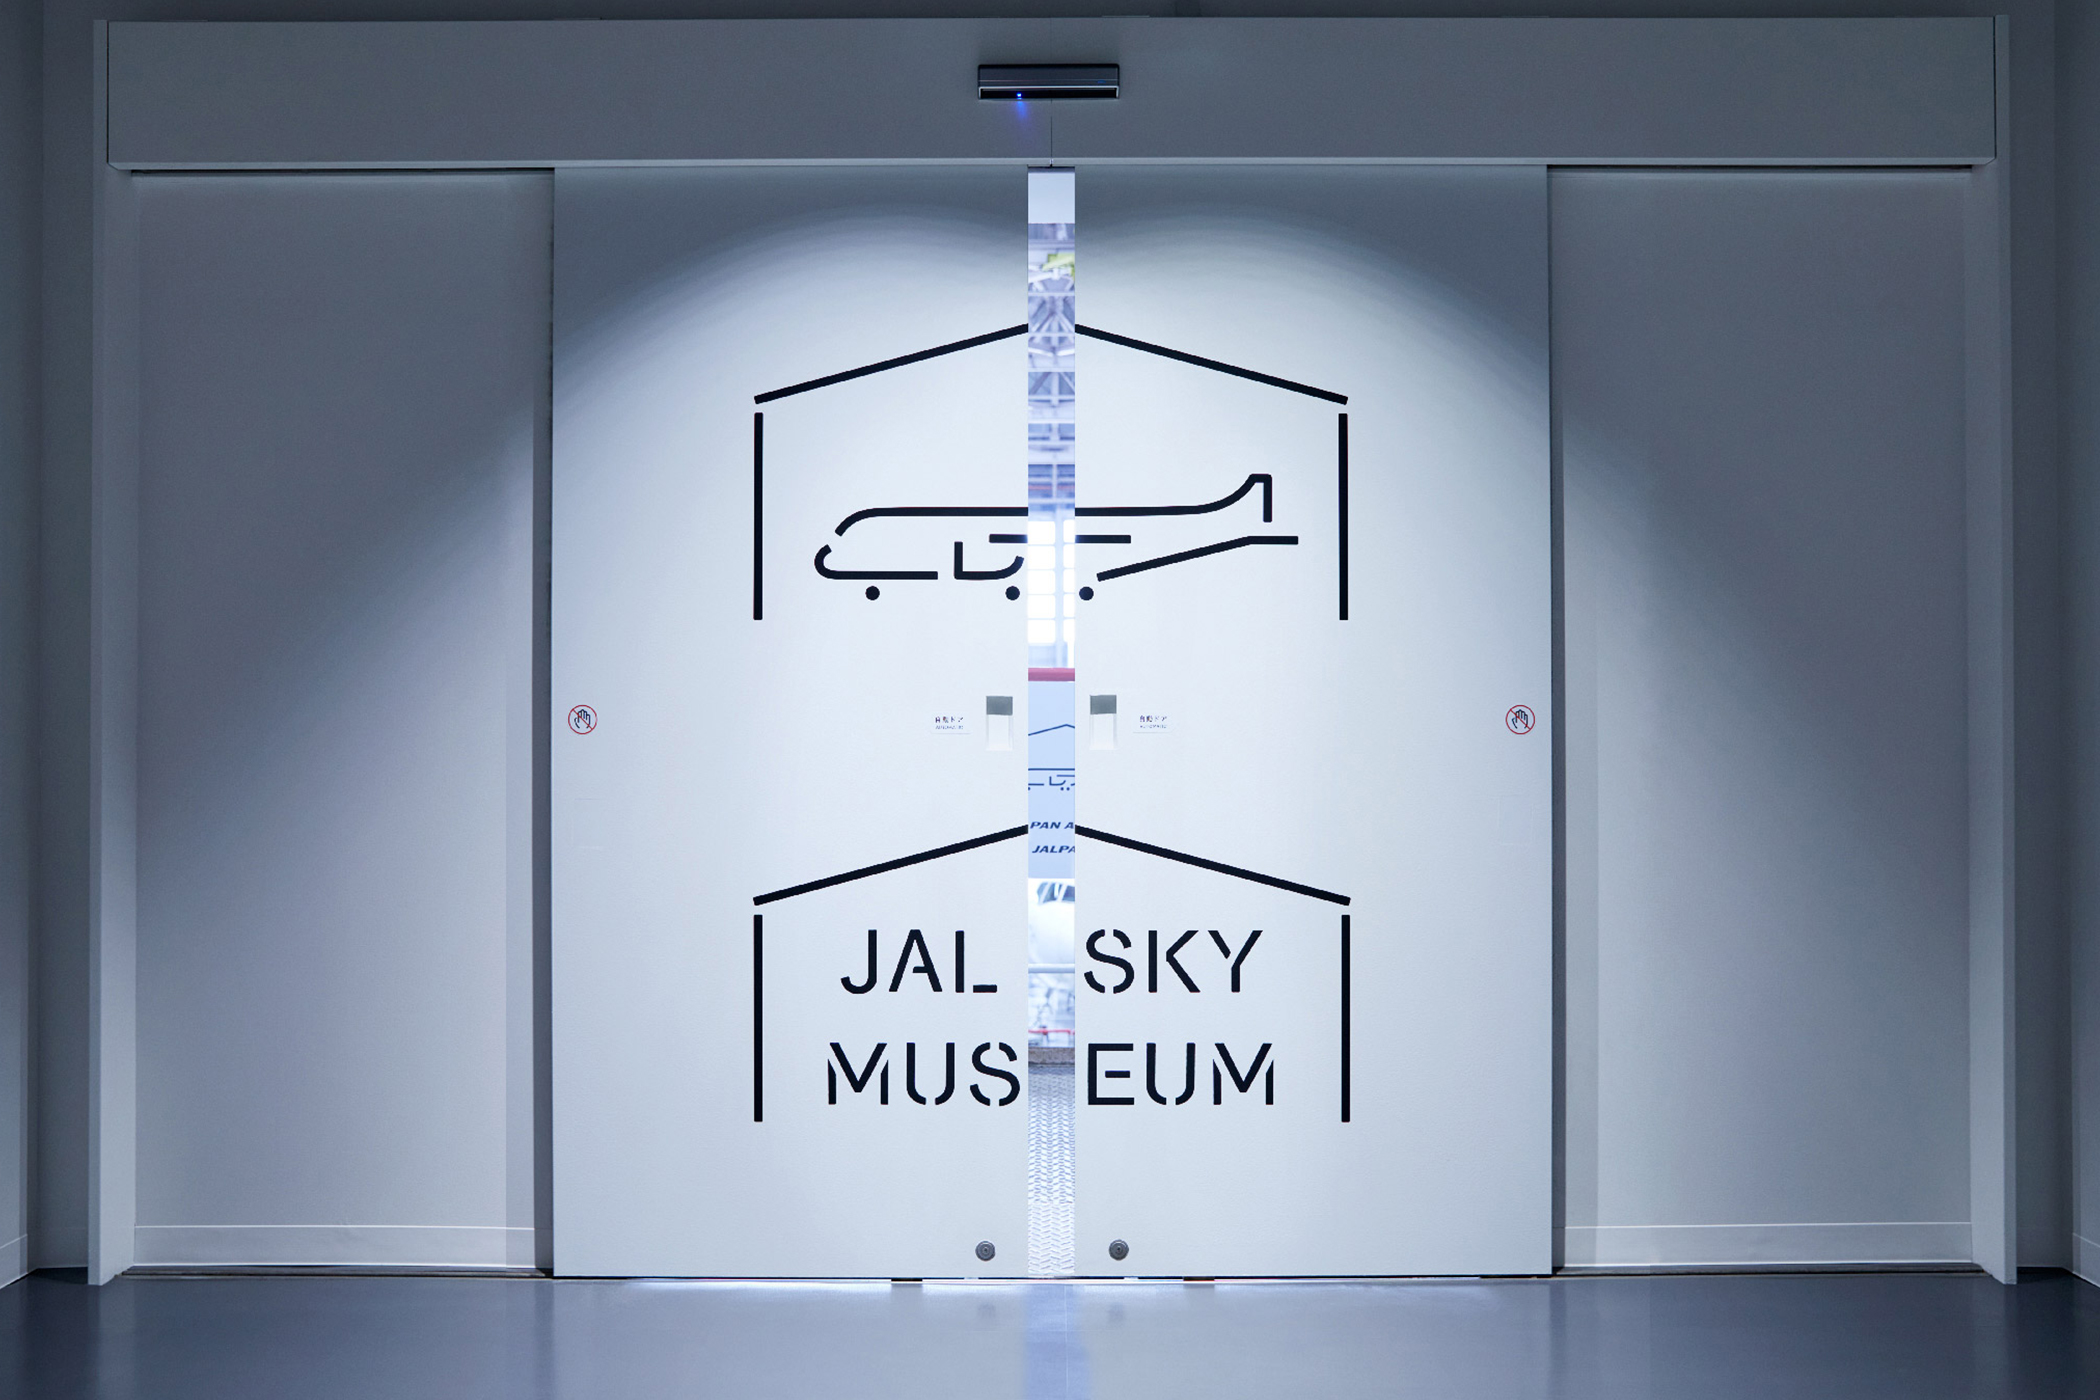 JAL SKY MUSEUM